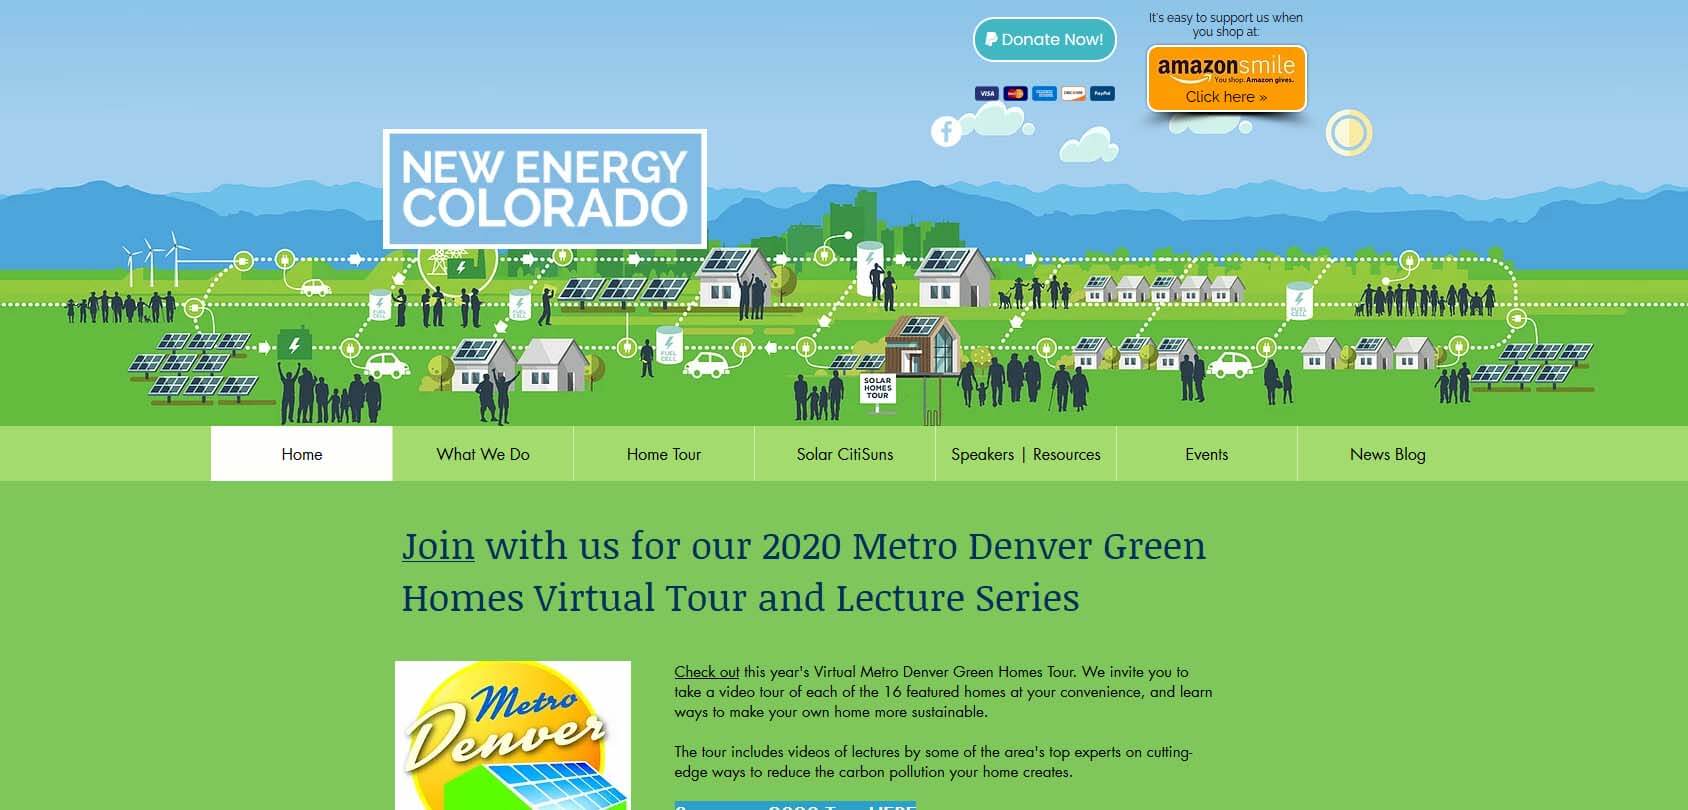 New Energy Colorado Homepage